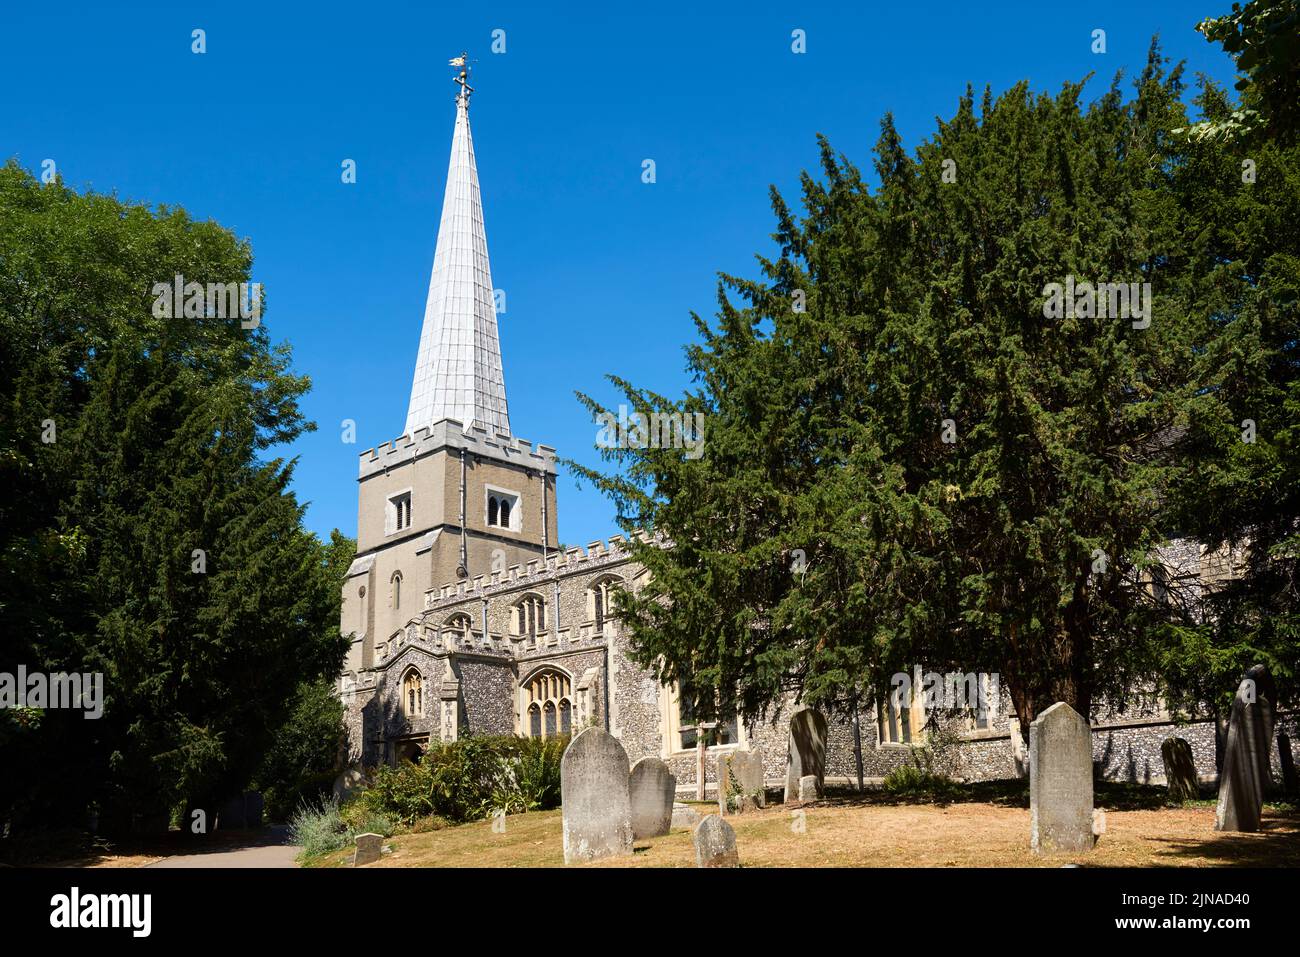 The historic Grade I listed St Mary's church at Harrow-on-the-Hill, Greater London UK Stock Photo